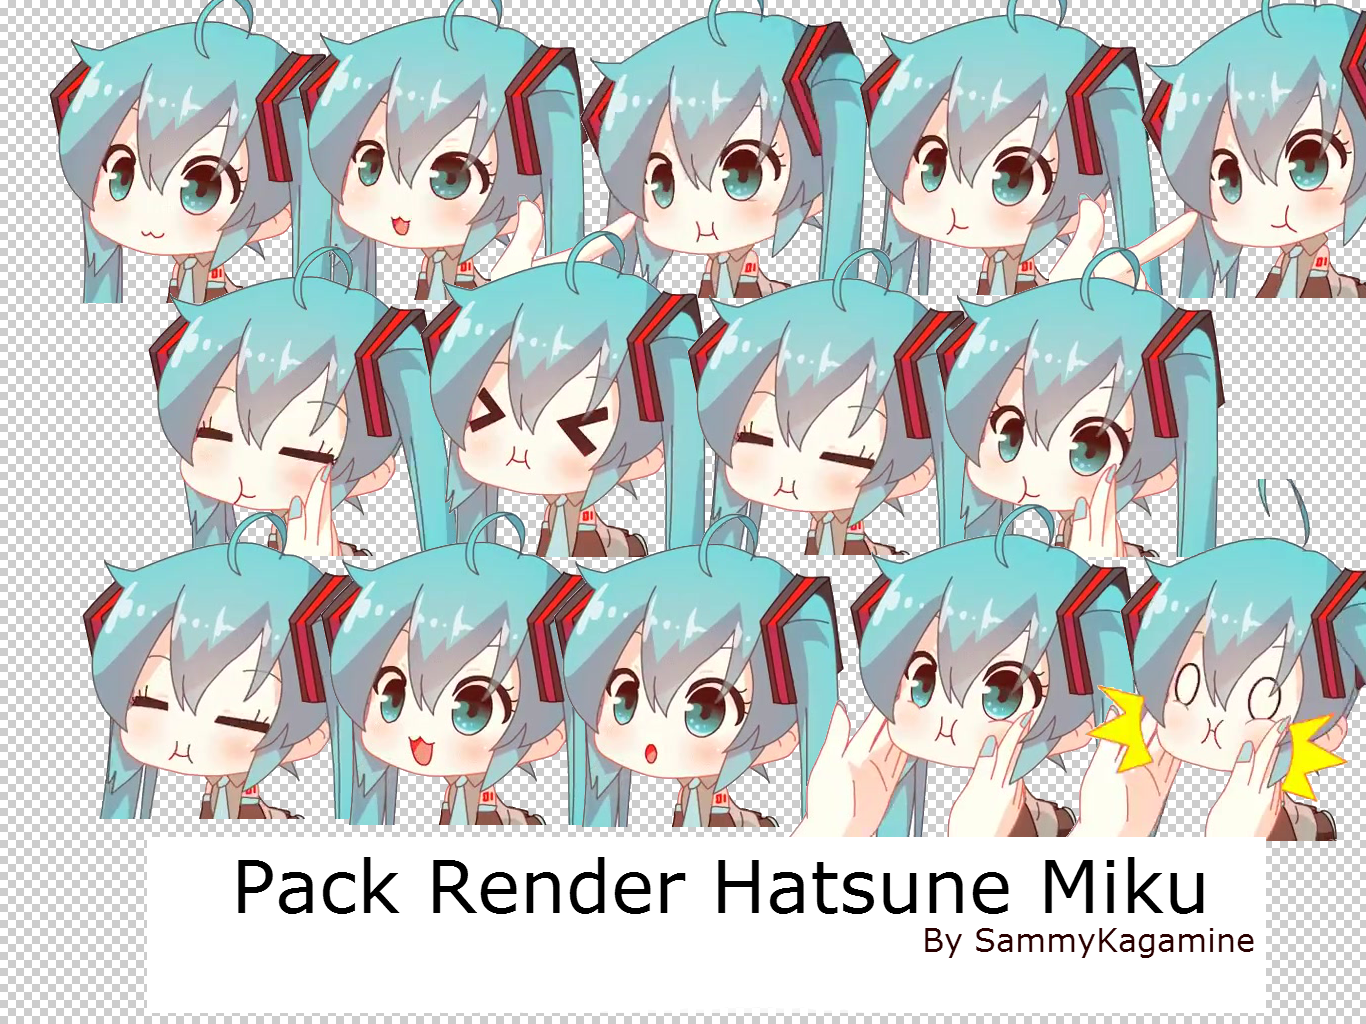 Pack Render Hatsune Miku